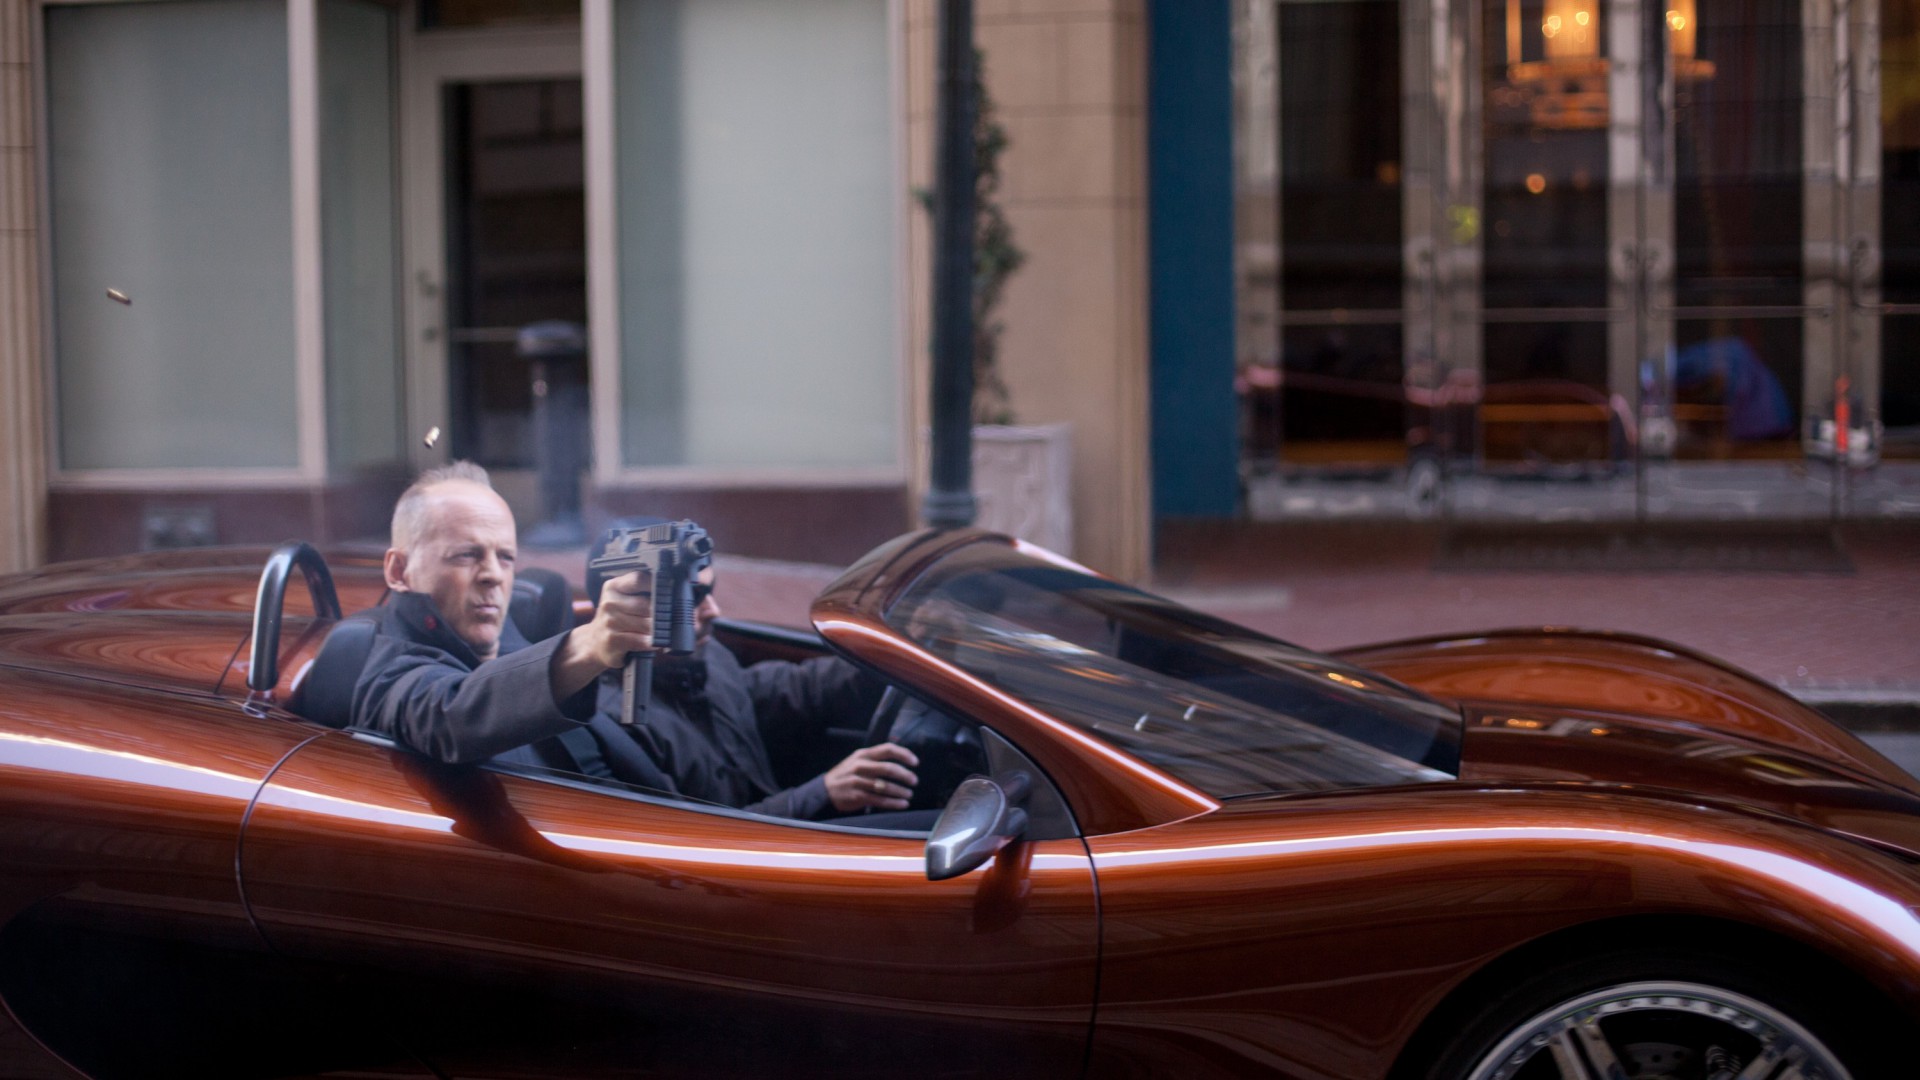 Bruce Willis, Looper, Most Popular Celebs in 2015, actor, car, gun (horizontal)